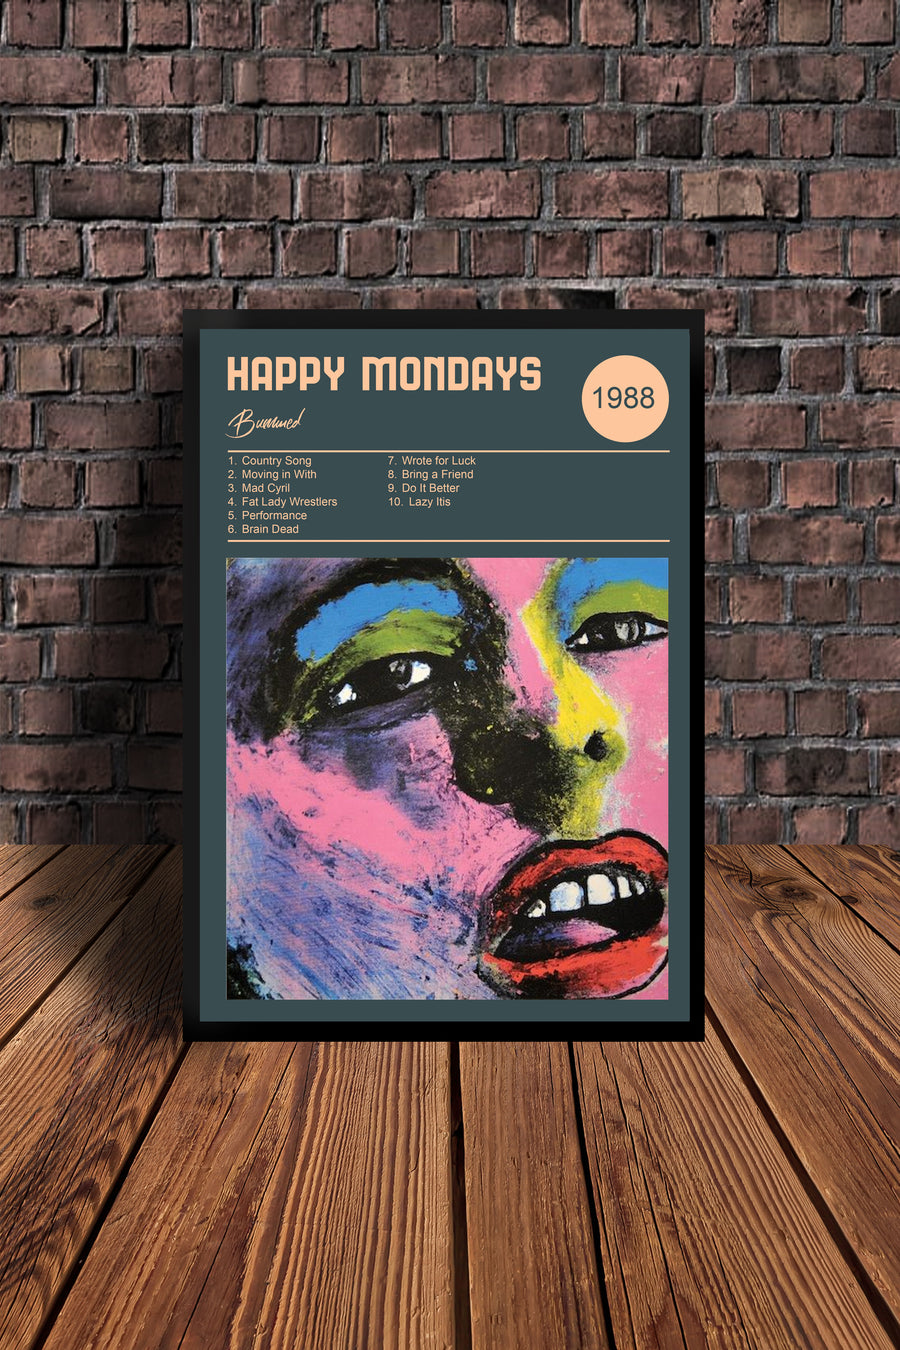 The Happy Mondays Bummed Print